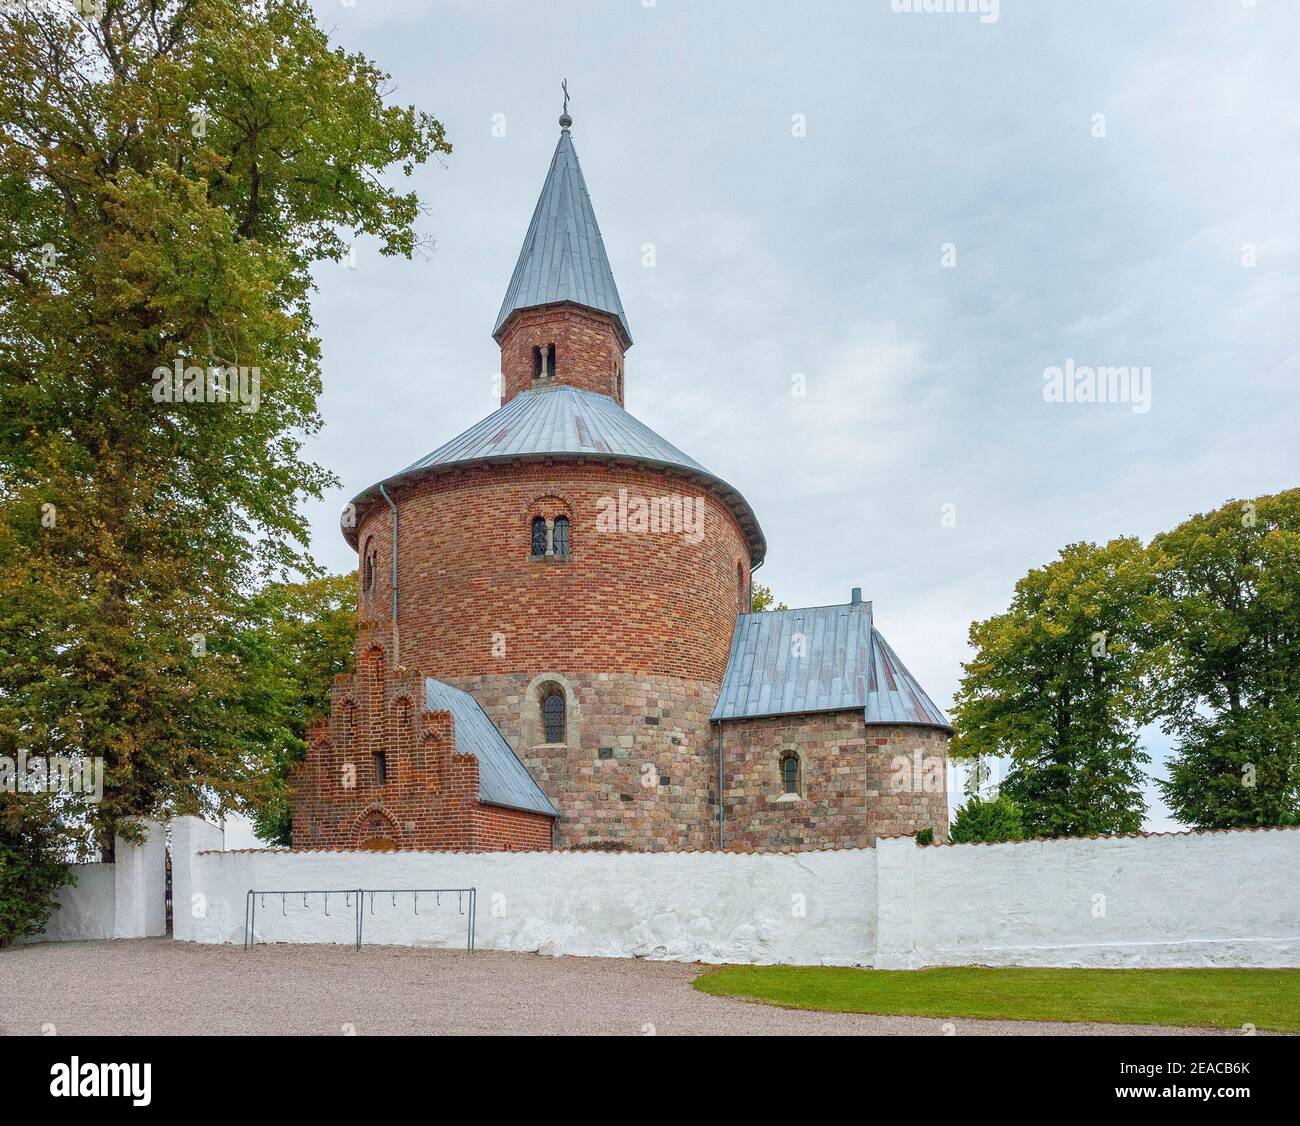 Denmark, Zealand island, Soro-Bjernede, Bjernede Kirke, round church in brick architecture. Stock Photo